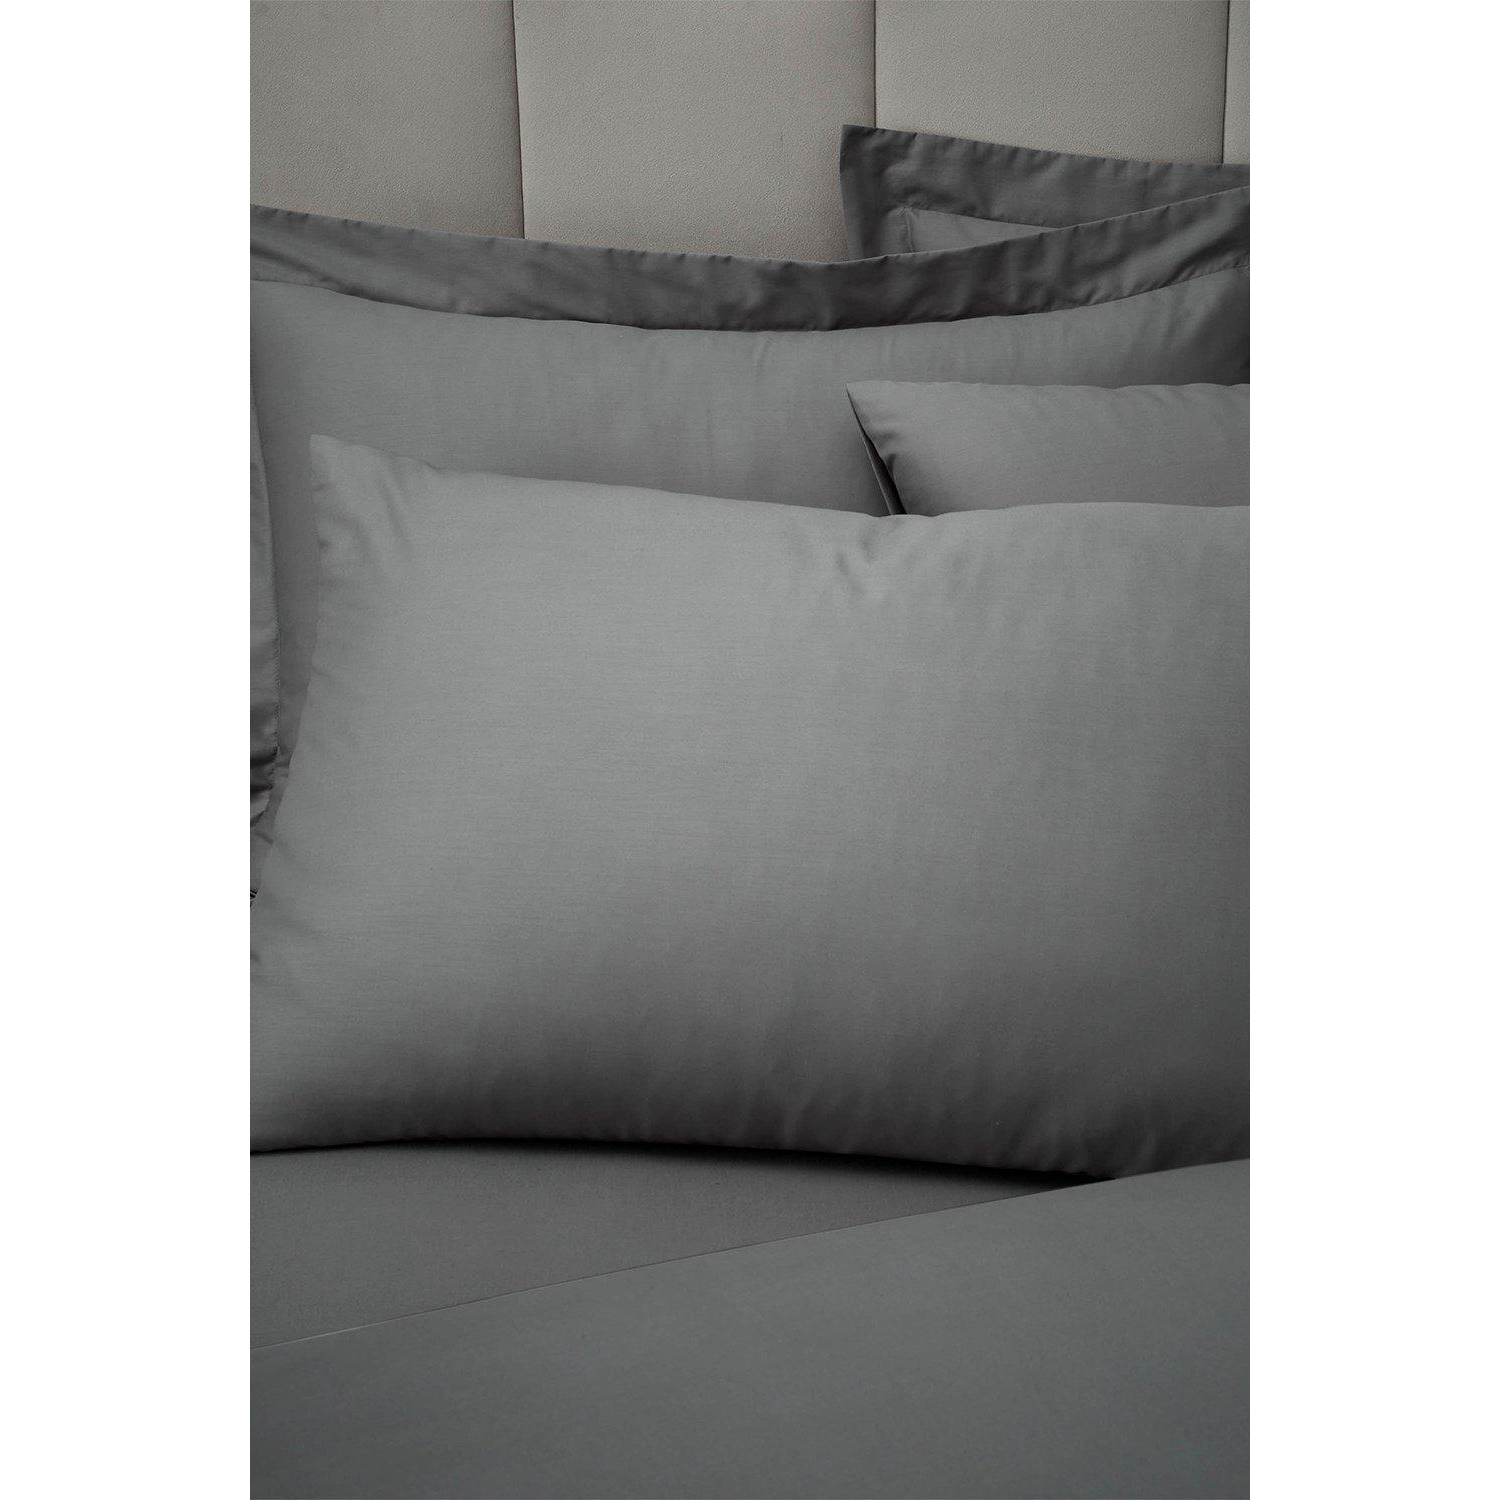 '180 Thread Count Egyptian Cotton' Standard Pillowcase Pair - image 1